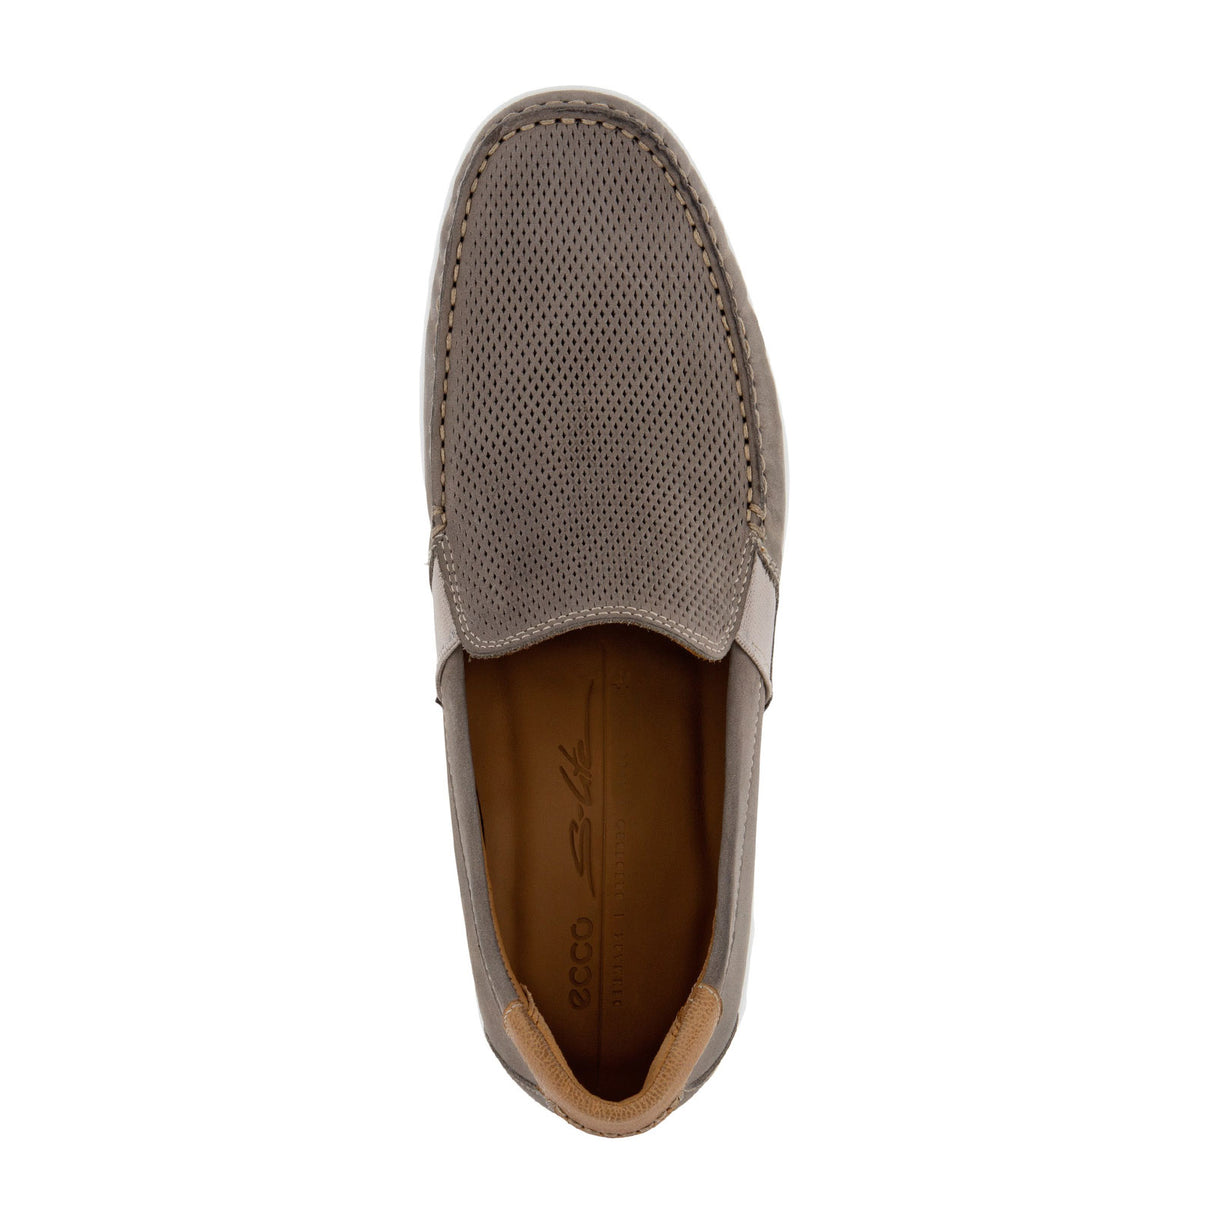 ECCO S Lite Moc Slip On (Men) - Warm Grey/Cognac Dress-Casual - Slip Ons - The Heel Shoe Fitters